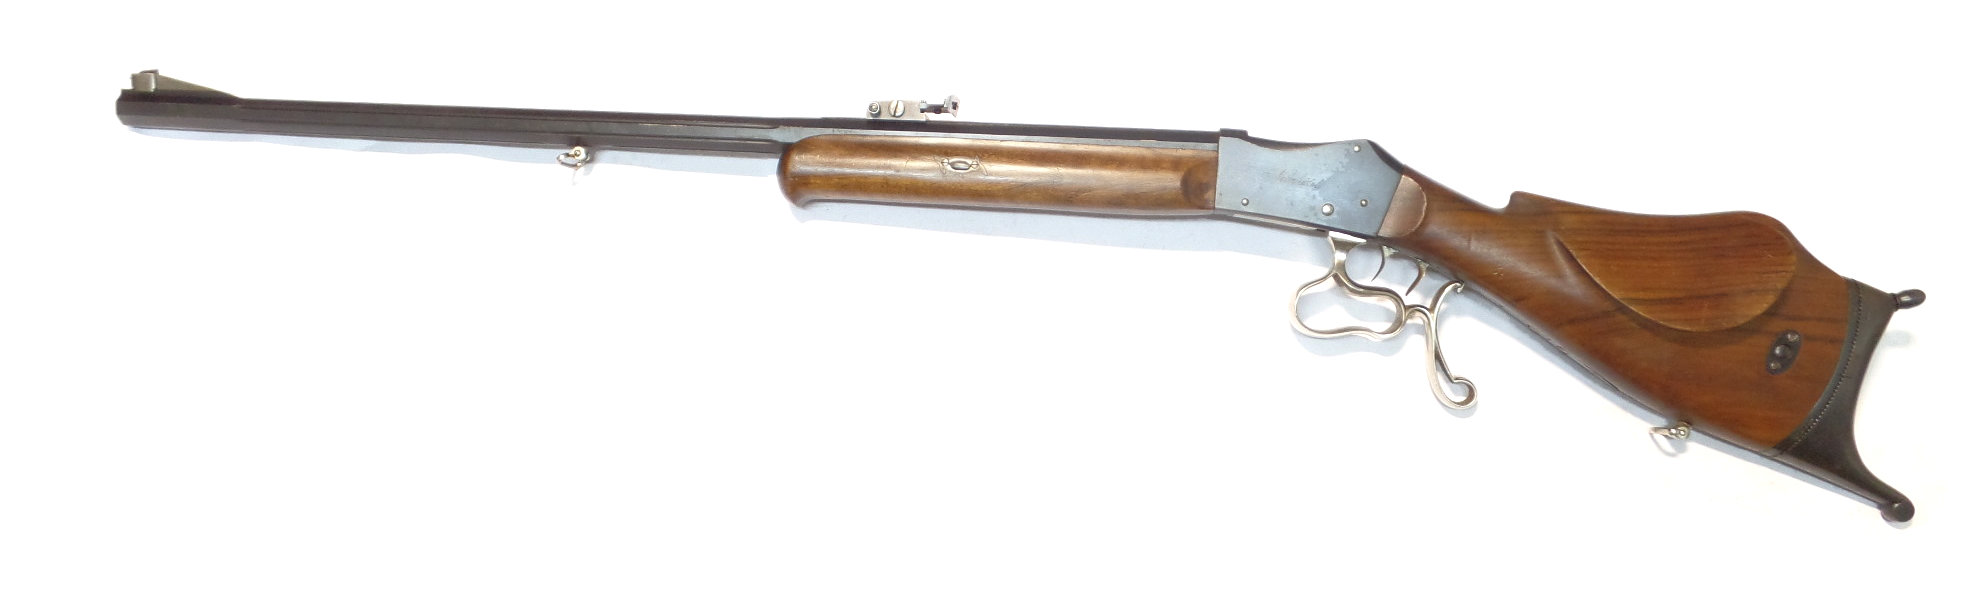 Carabine Match type Martini calibre 7.5x55